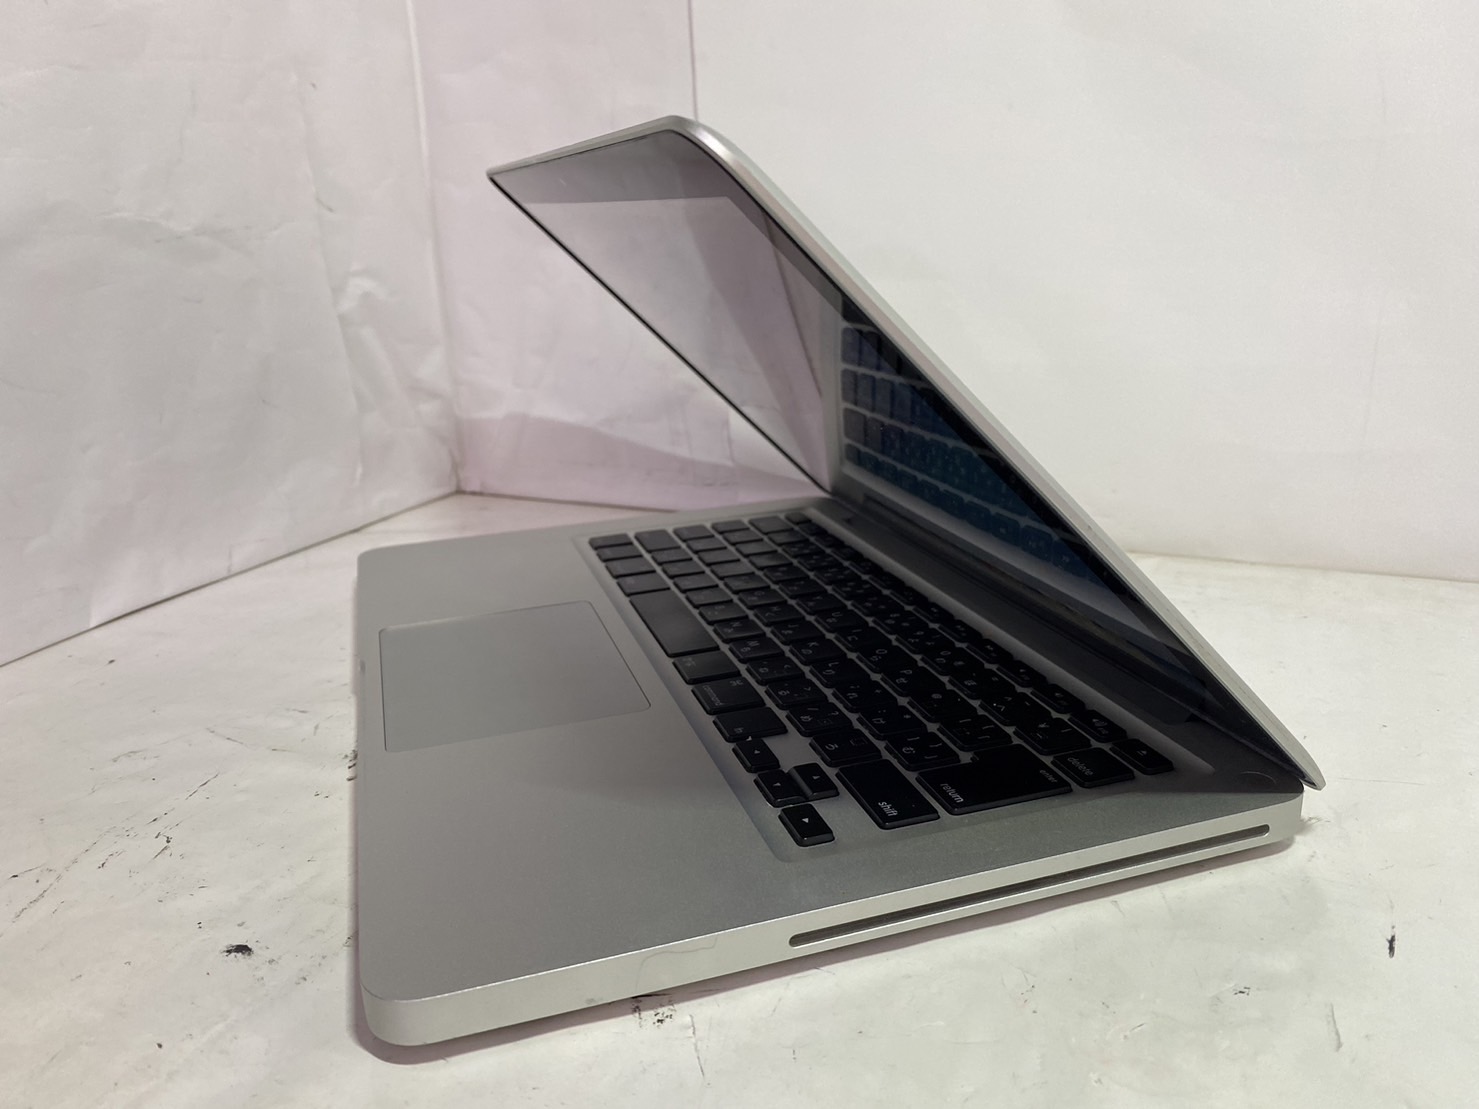 APPLE(アップル) MacBook (13-inch, Aluminum, Late 2008) A1278の激安 